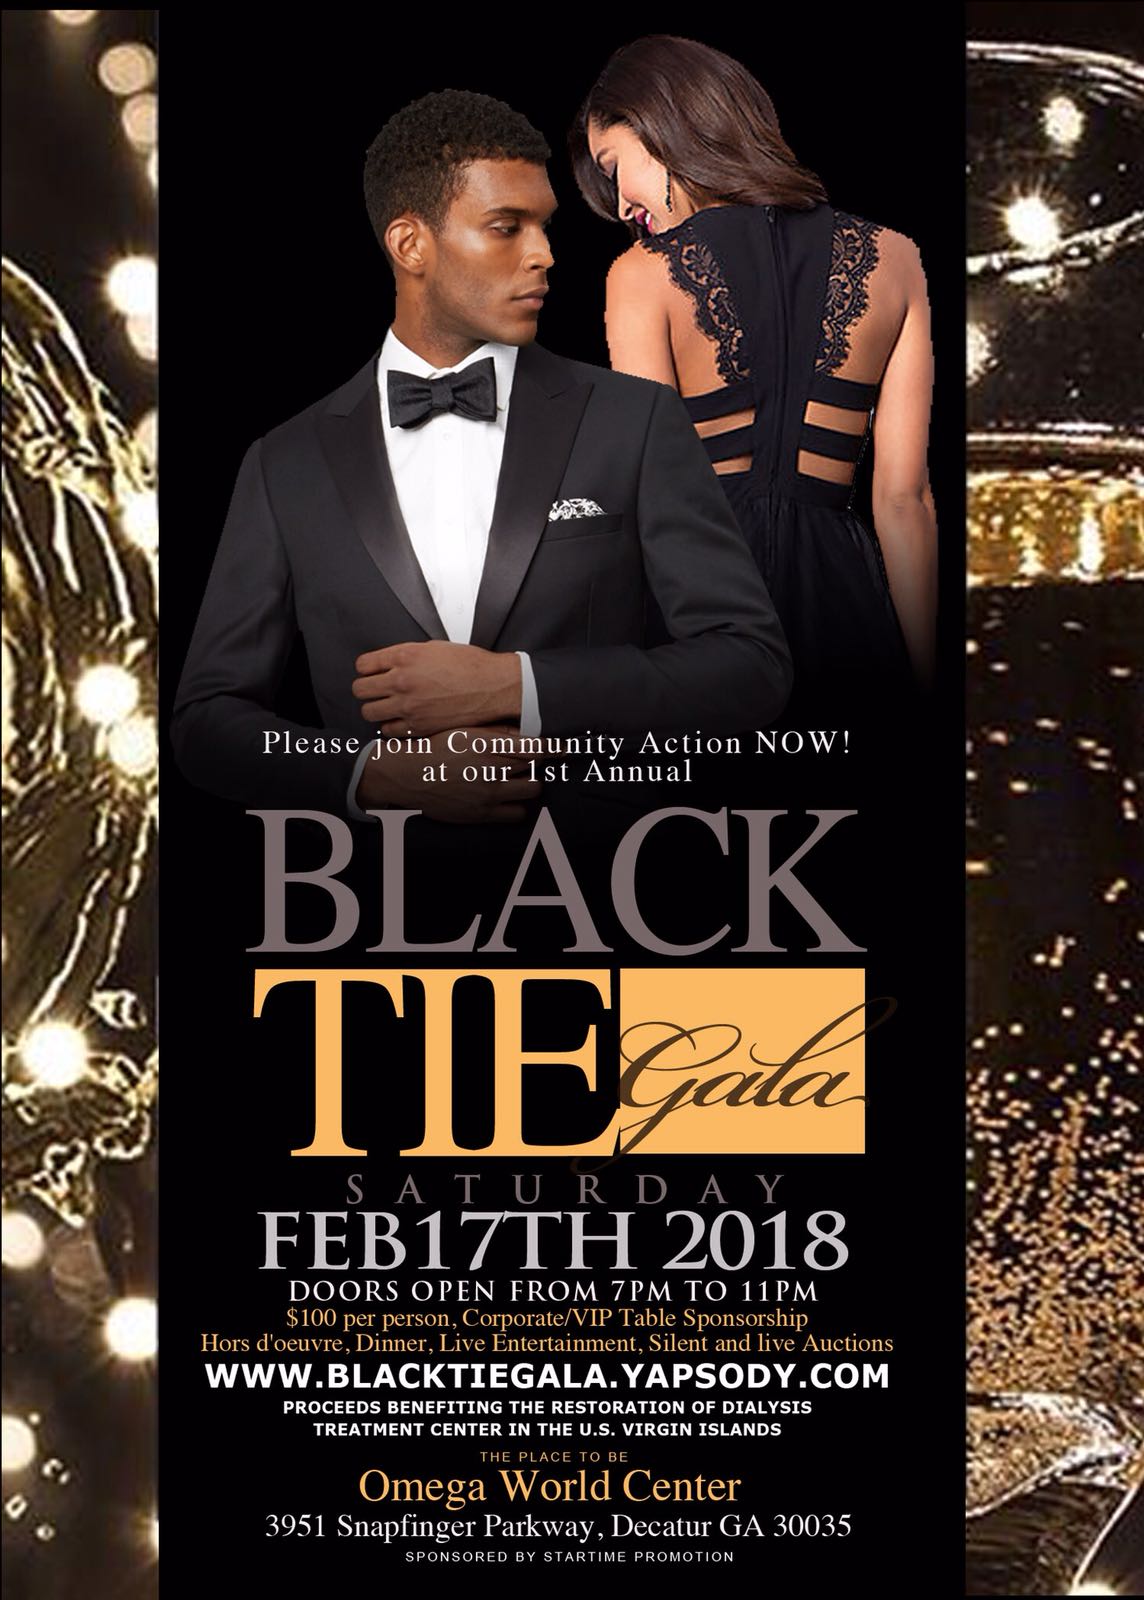 First Annual Black Tie Gala to Benefit U.S. Virgin Islands SAT Feb 17